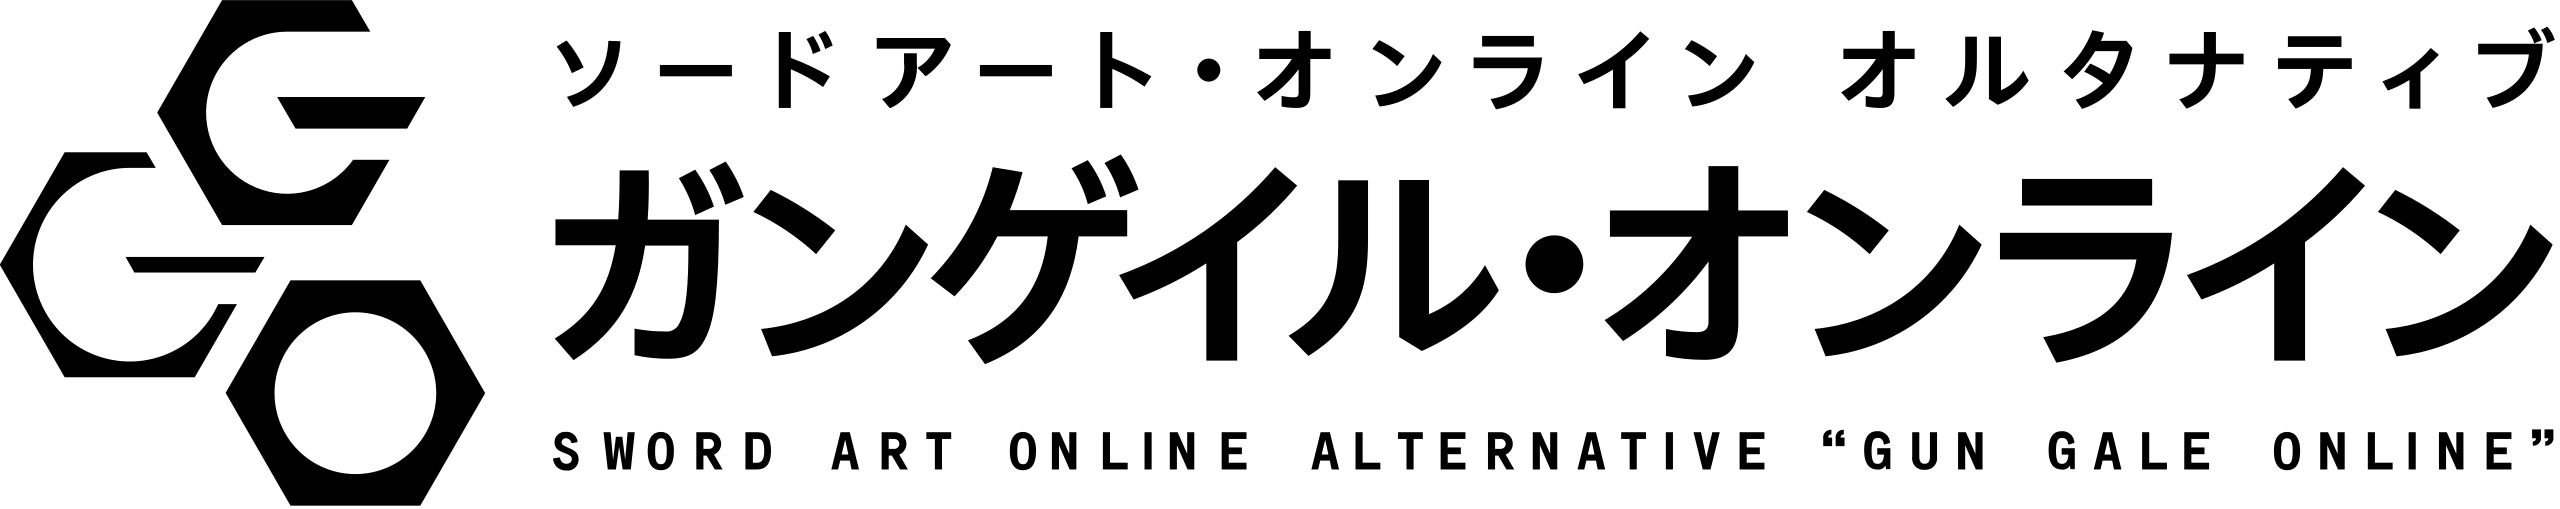 File:SAO Gun Gale Online anime logo.svg - Wikimedia Commons